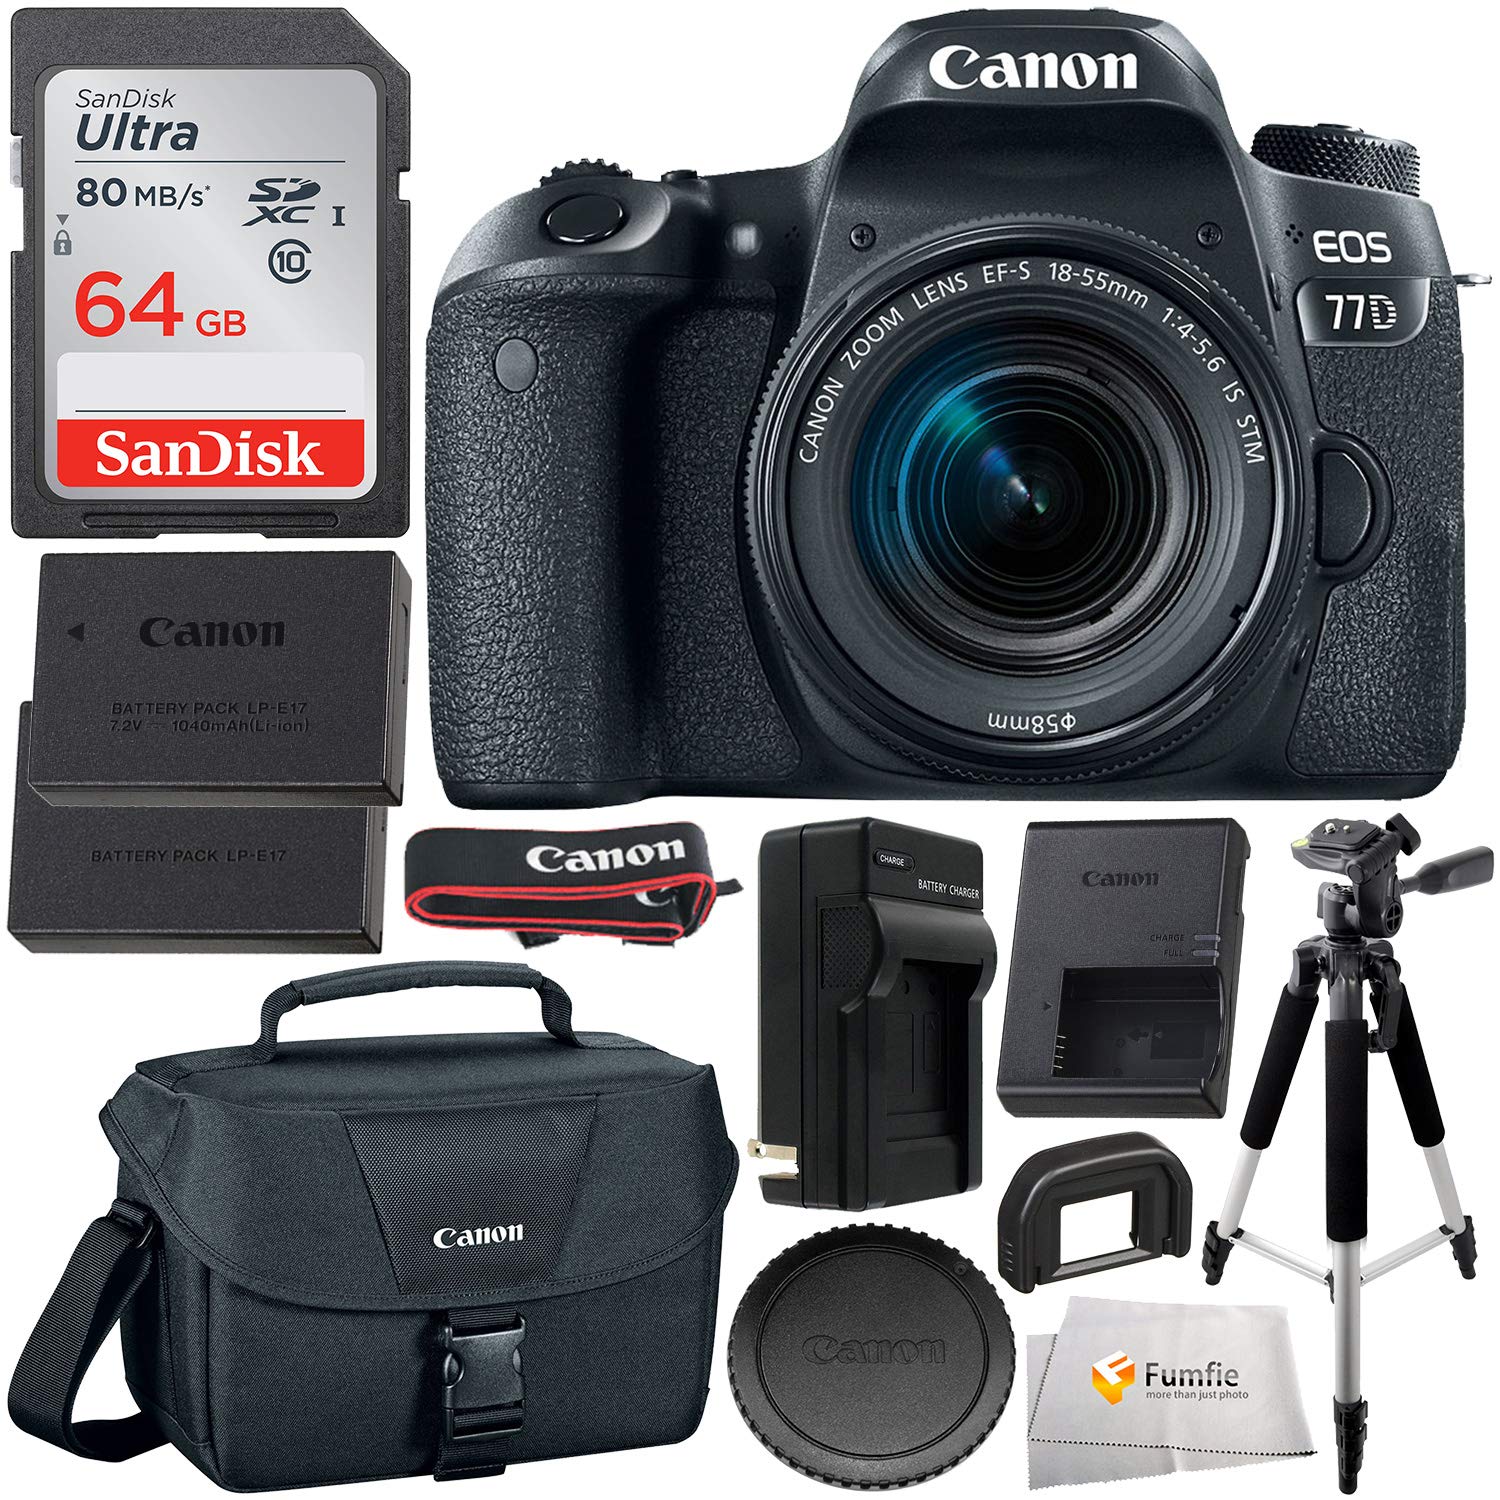 Canon EOS 77D DSLR Camera with 18-55mm Lens - 1892C016 & Essential Accessory Bundle